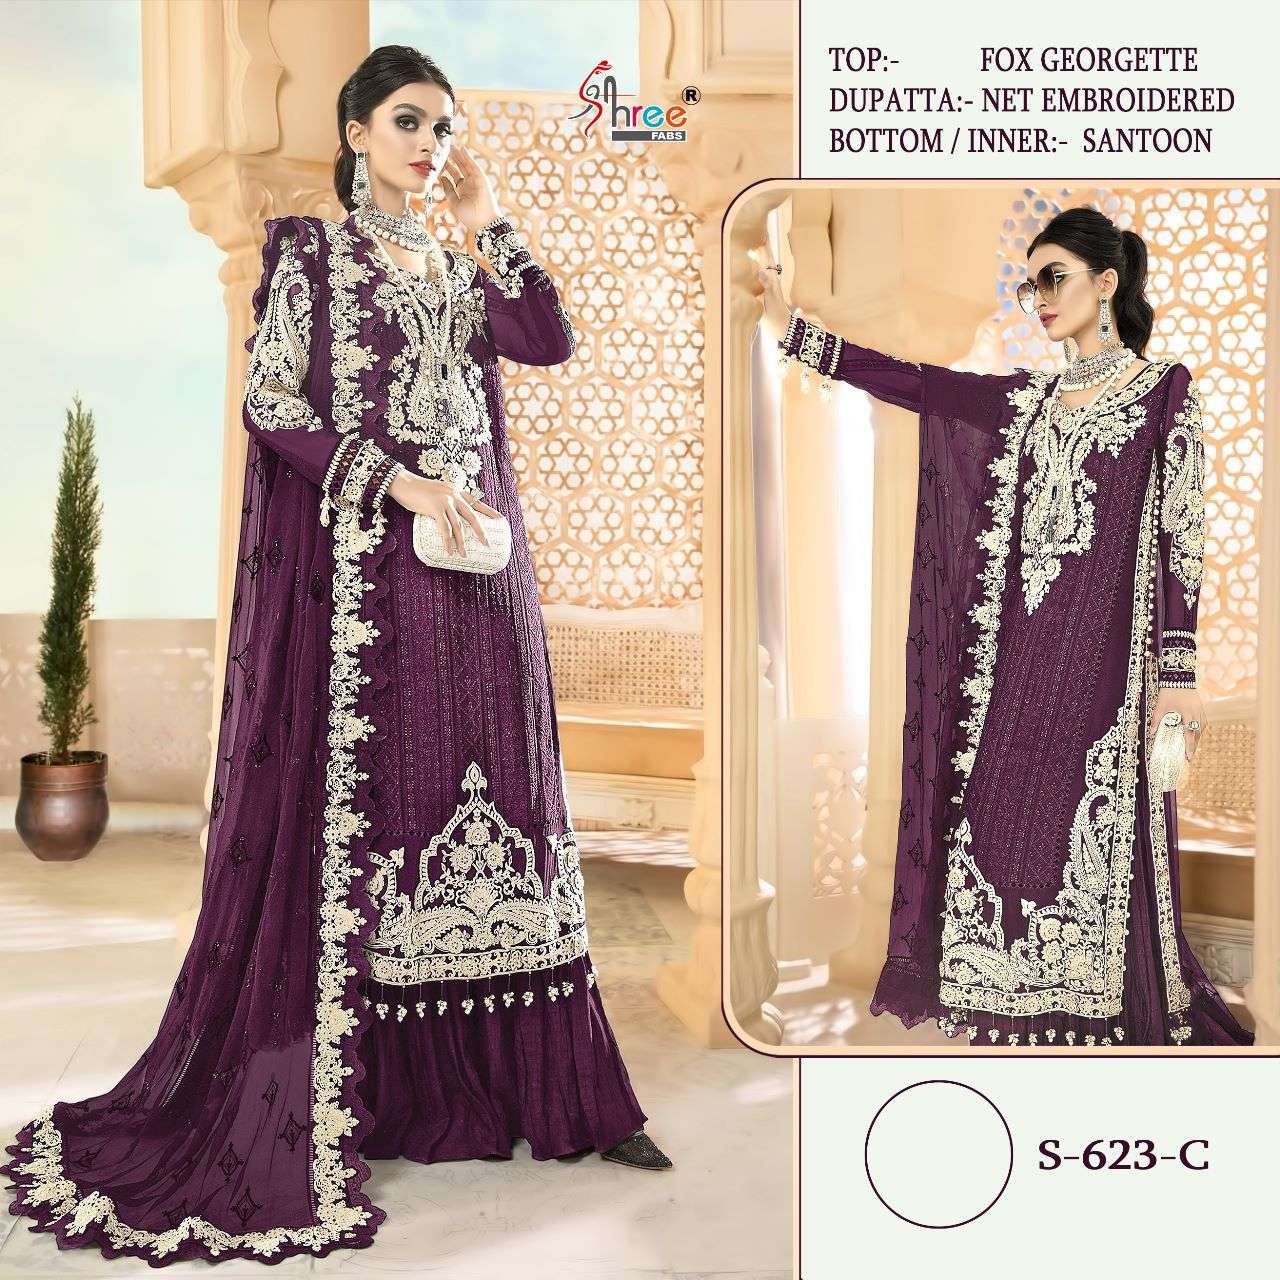 shree fabs 623 series attractive look designer pakistani suits manufacturer surat 